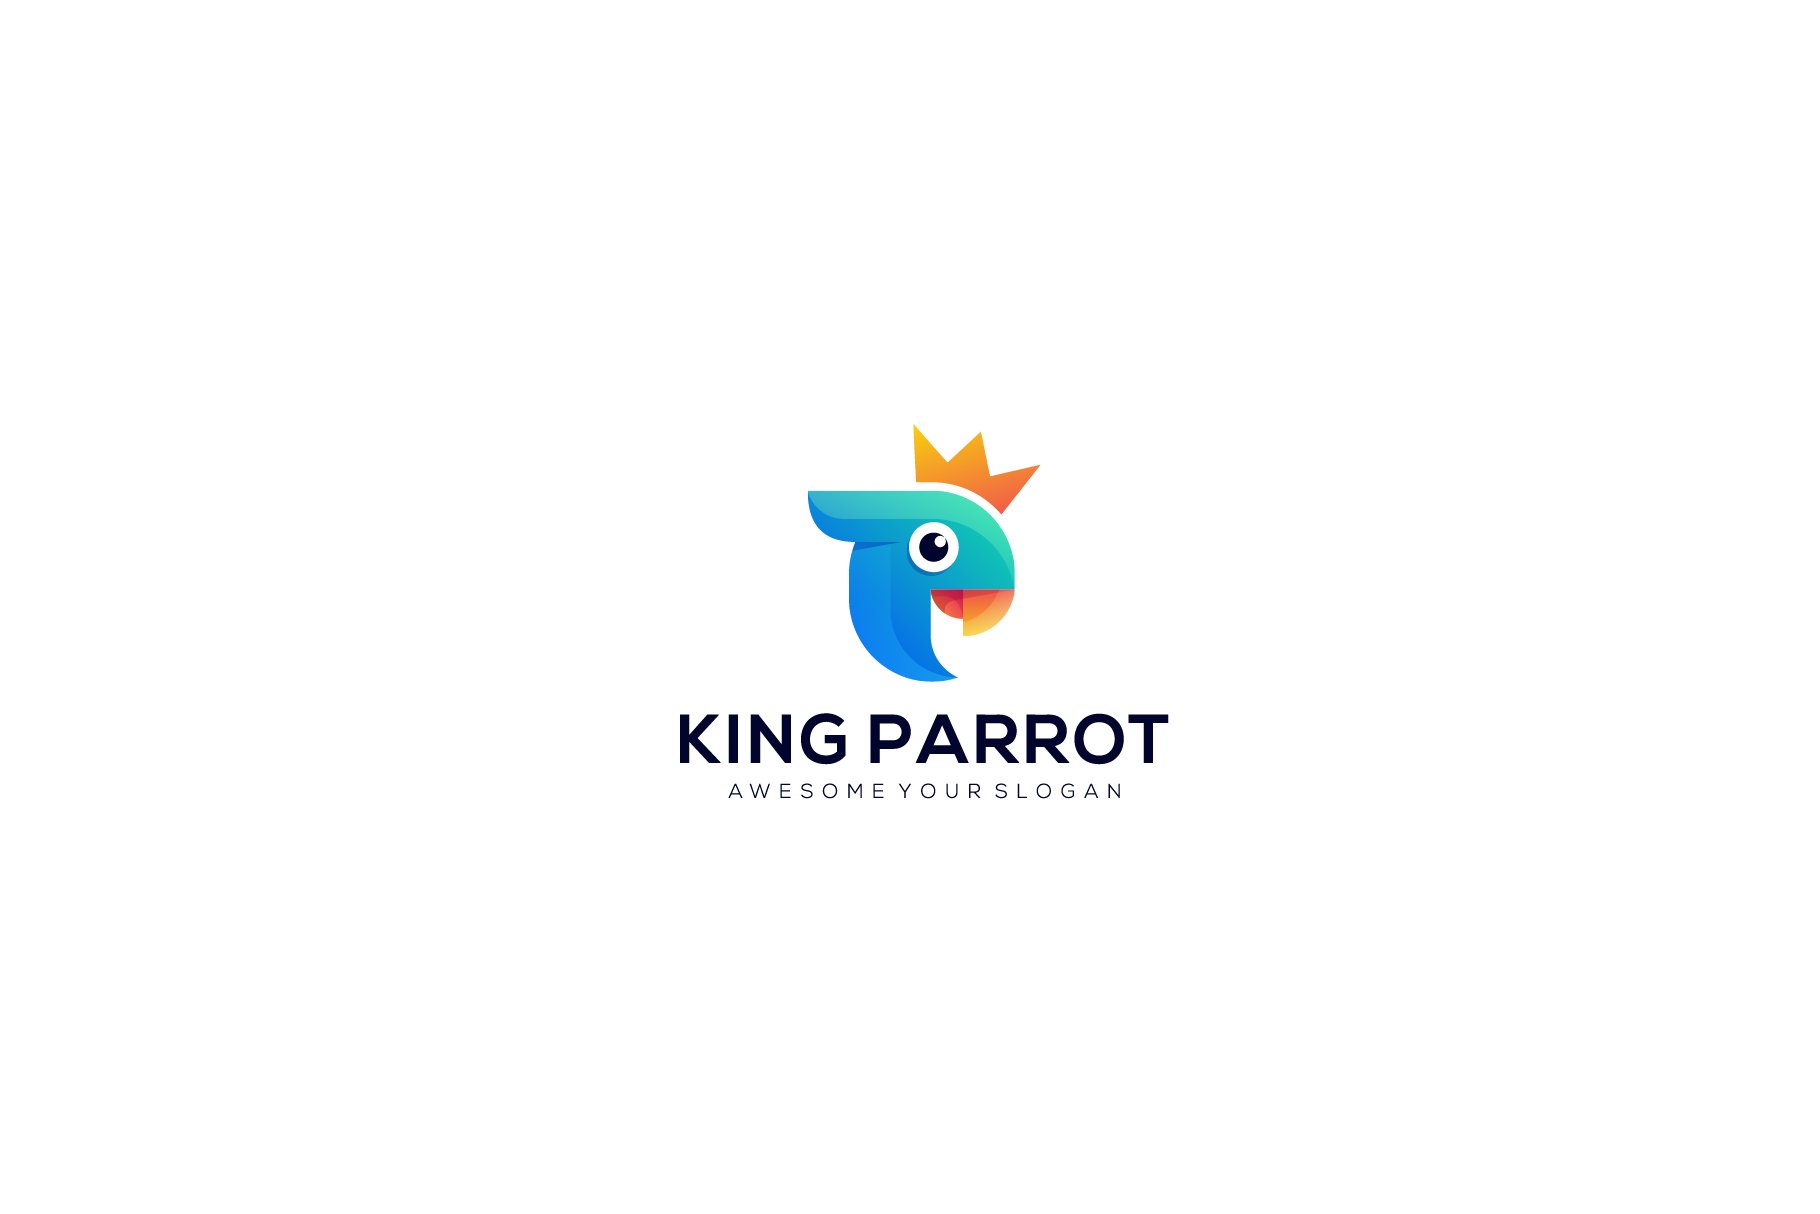 King parrot logo design Simple moder cover image.